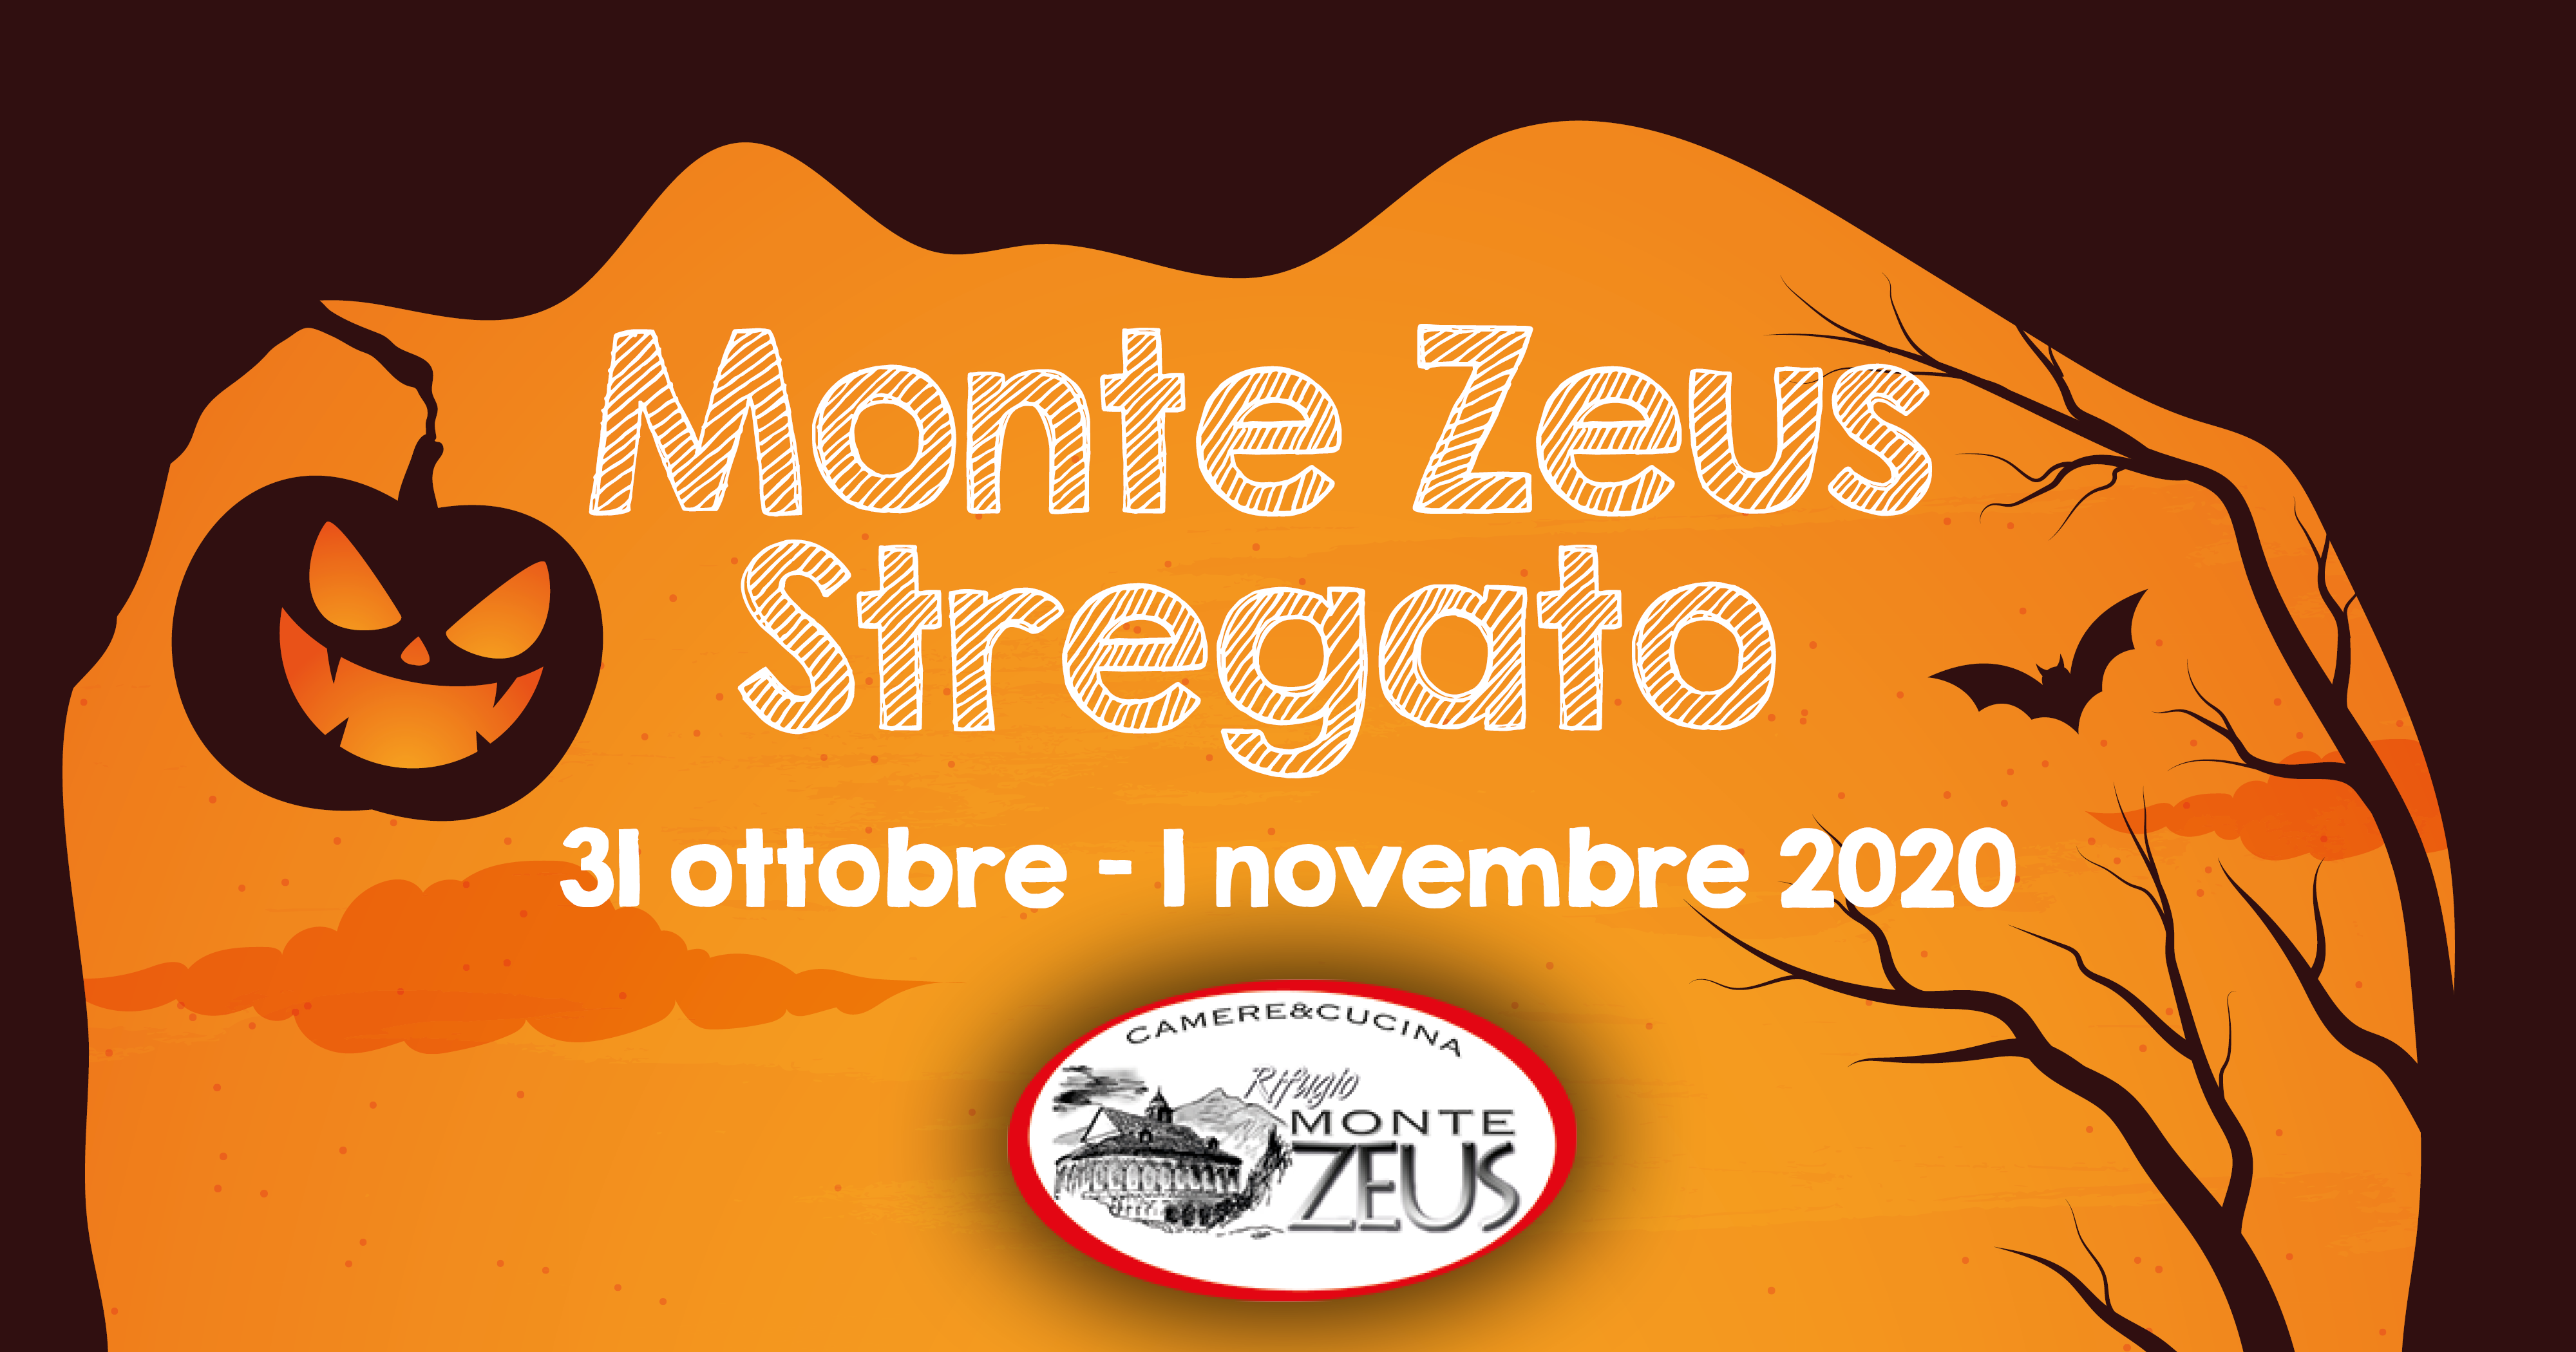 Monte Zeus Stregato - Weekend in Rifugio